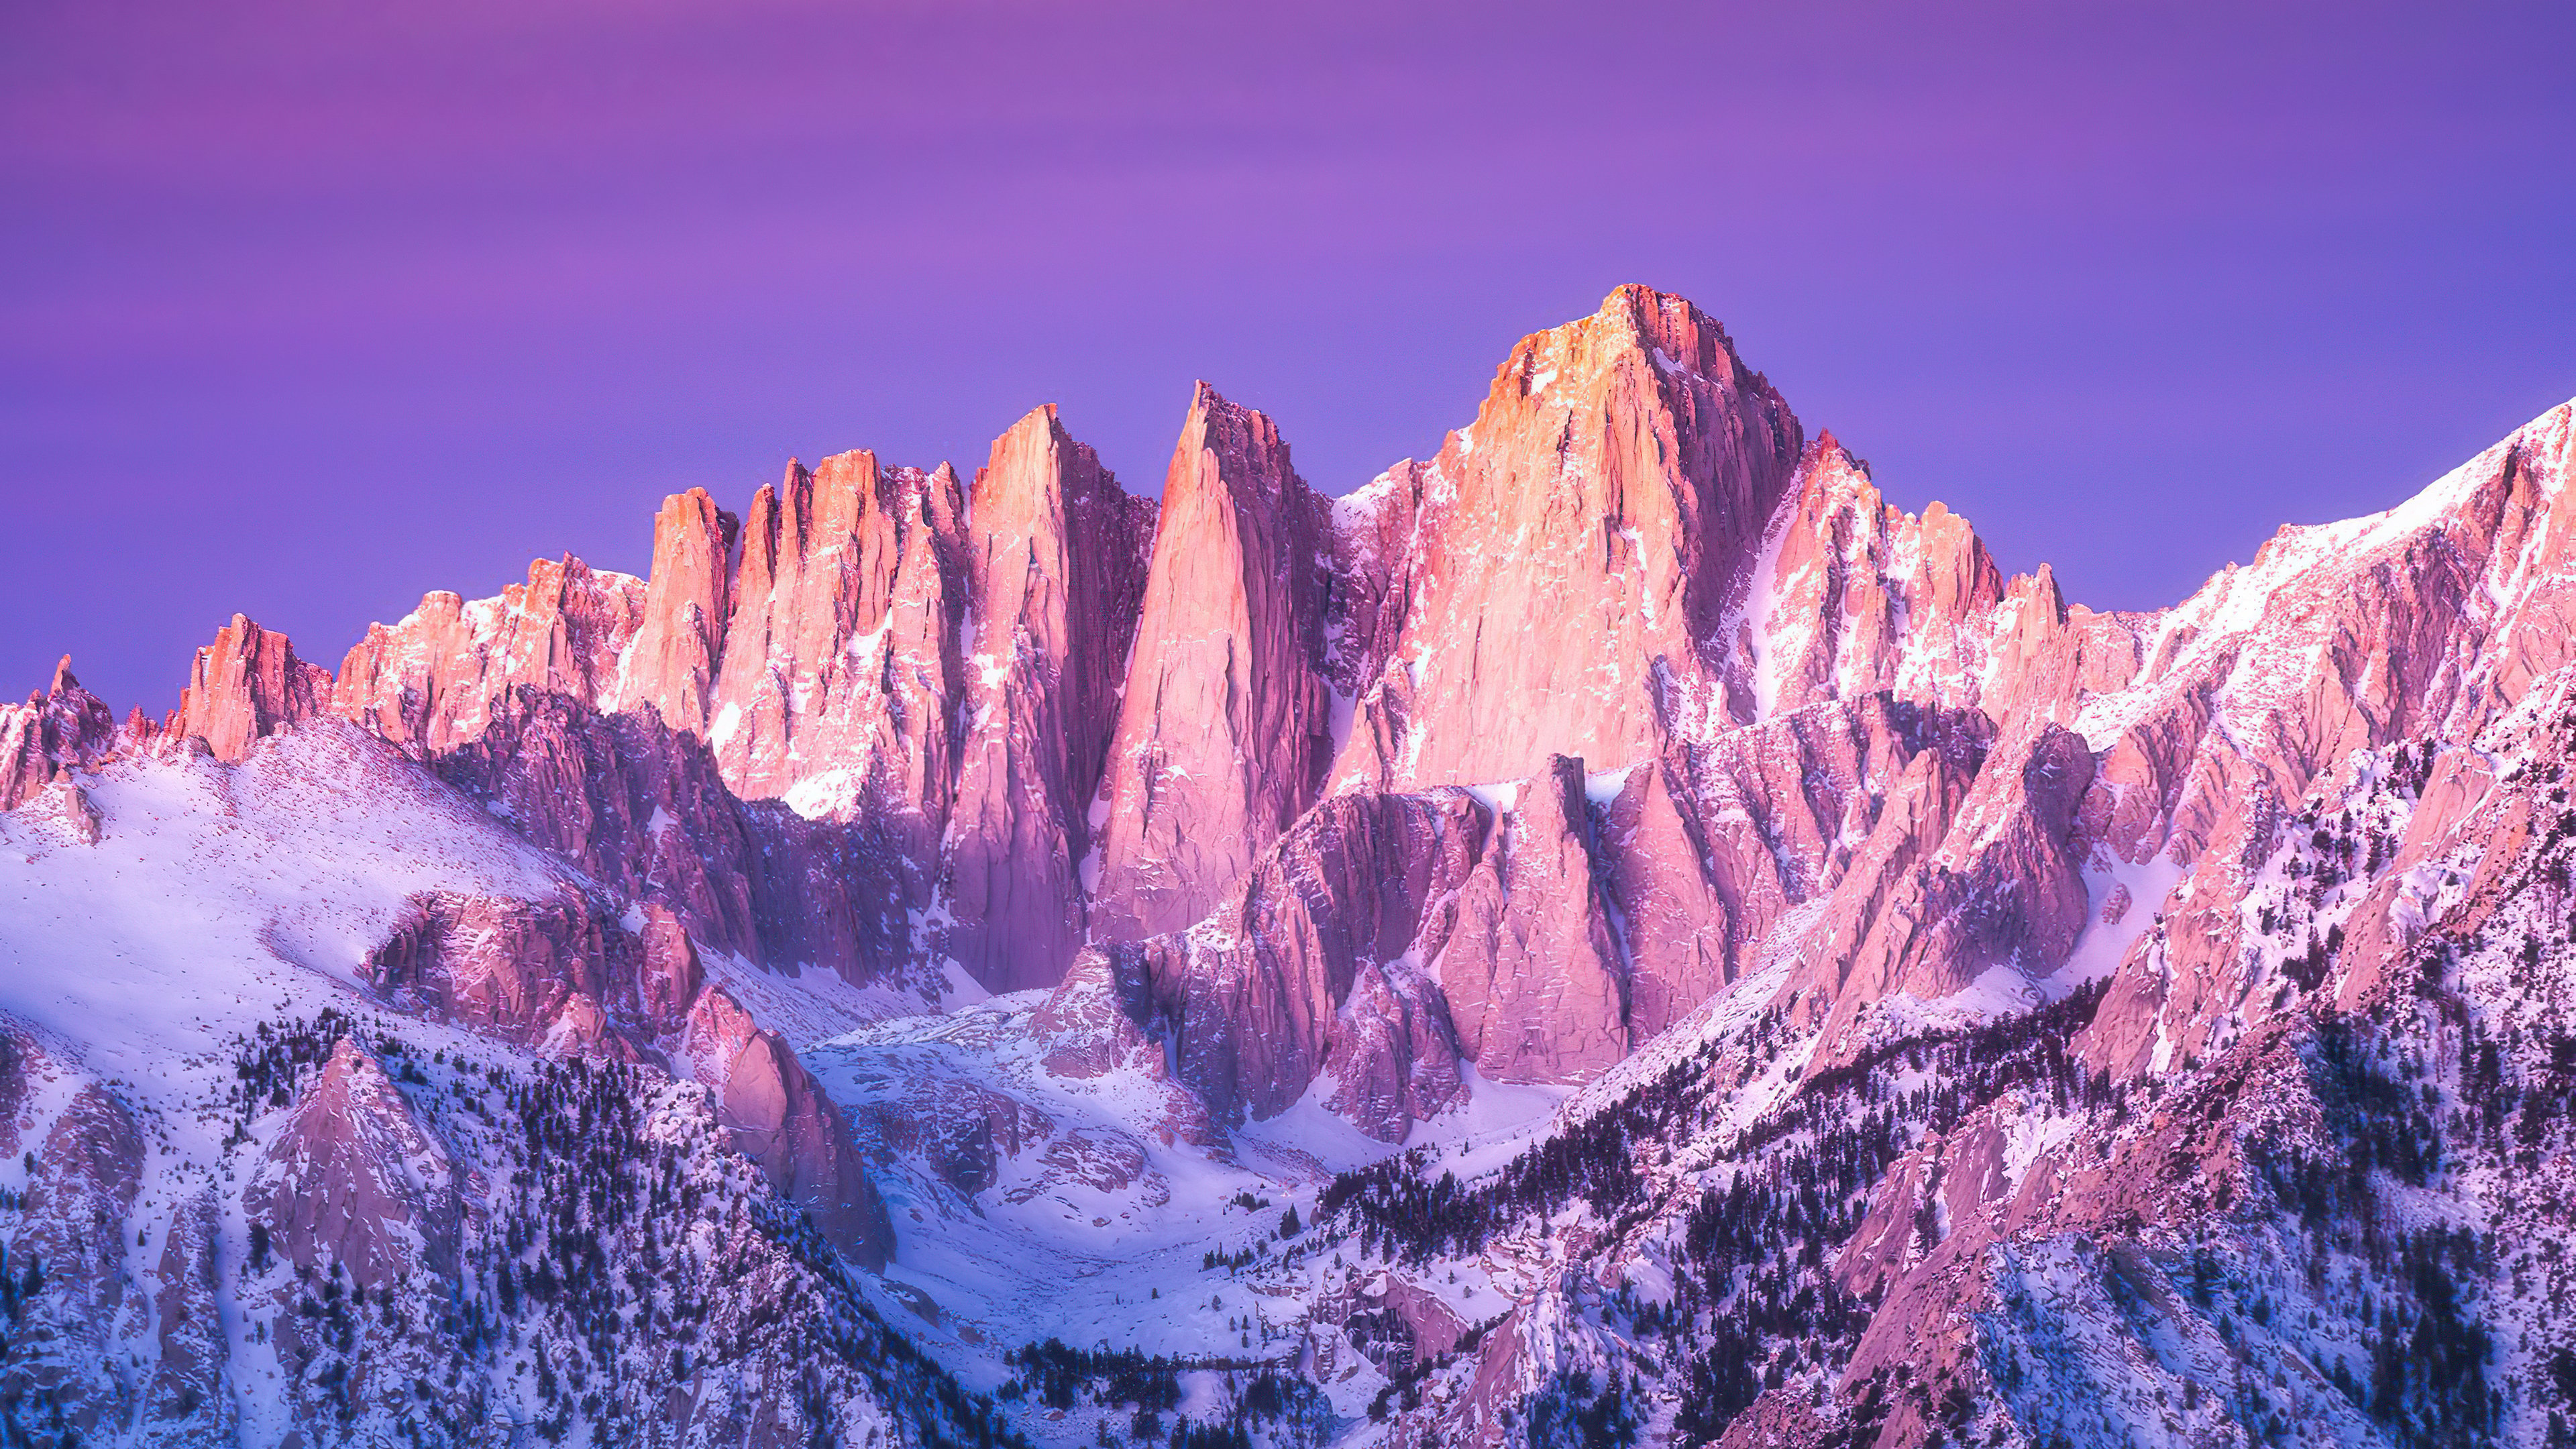 Wallpaper Peaks of mountains